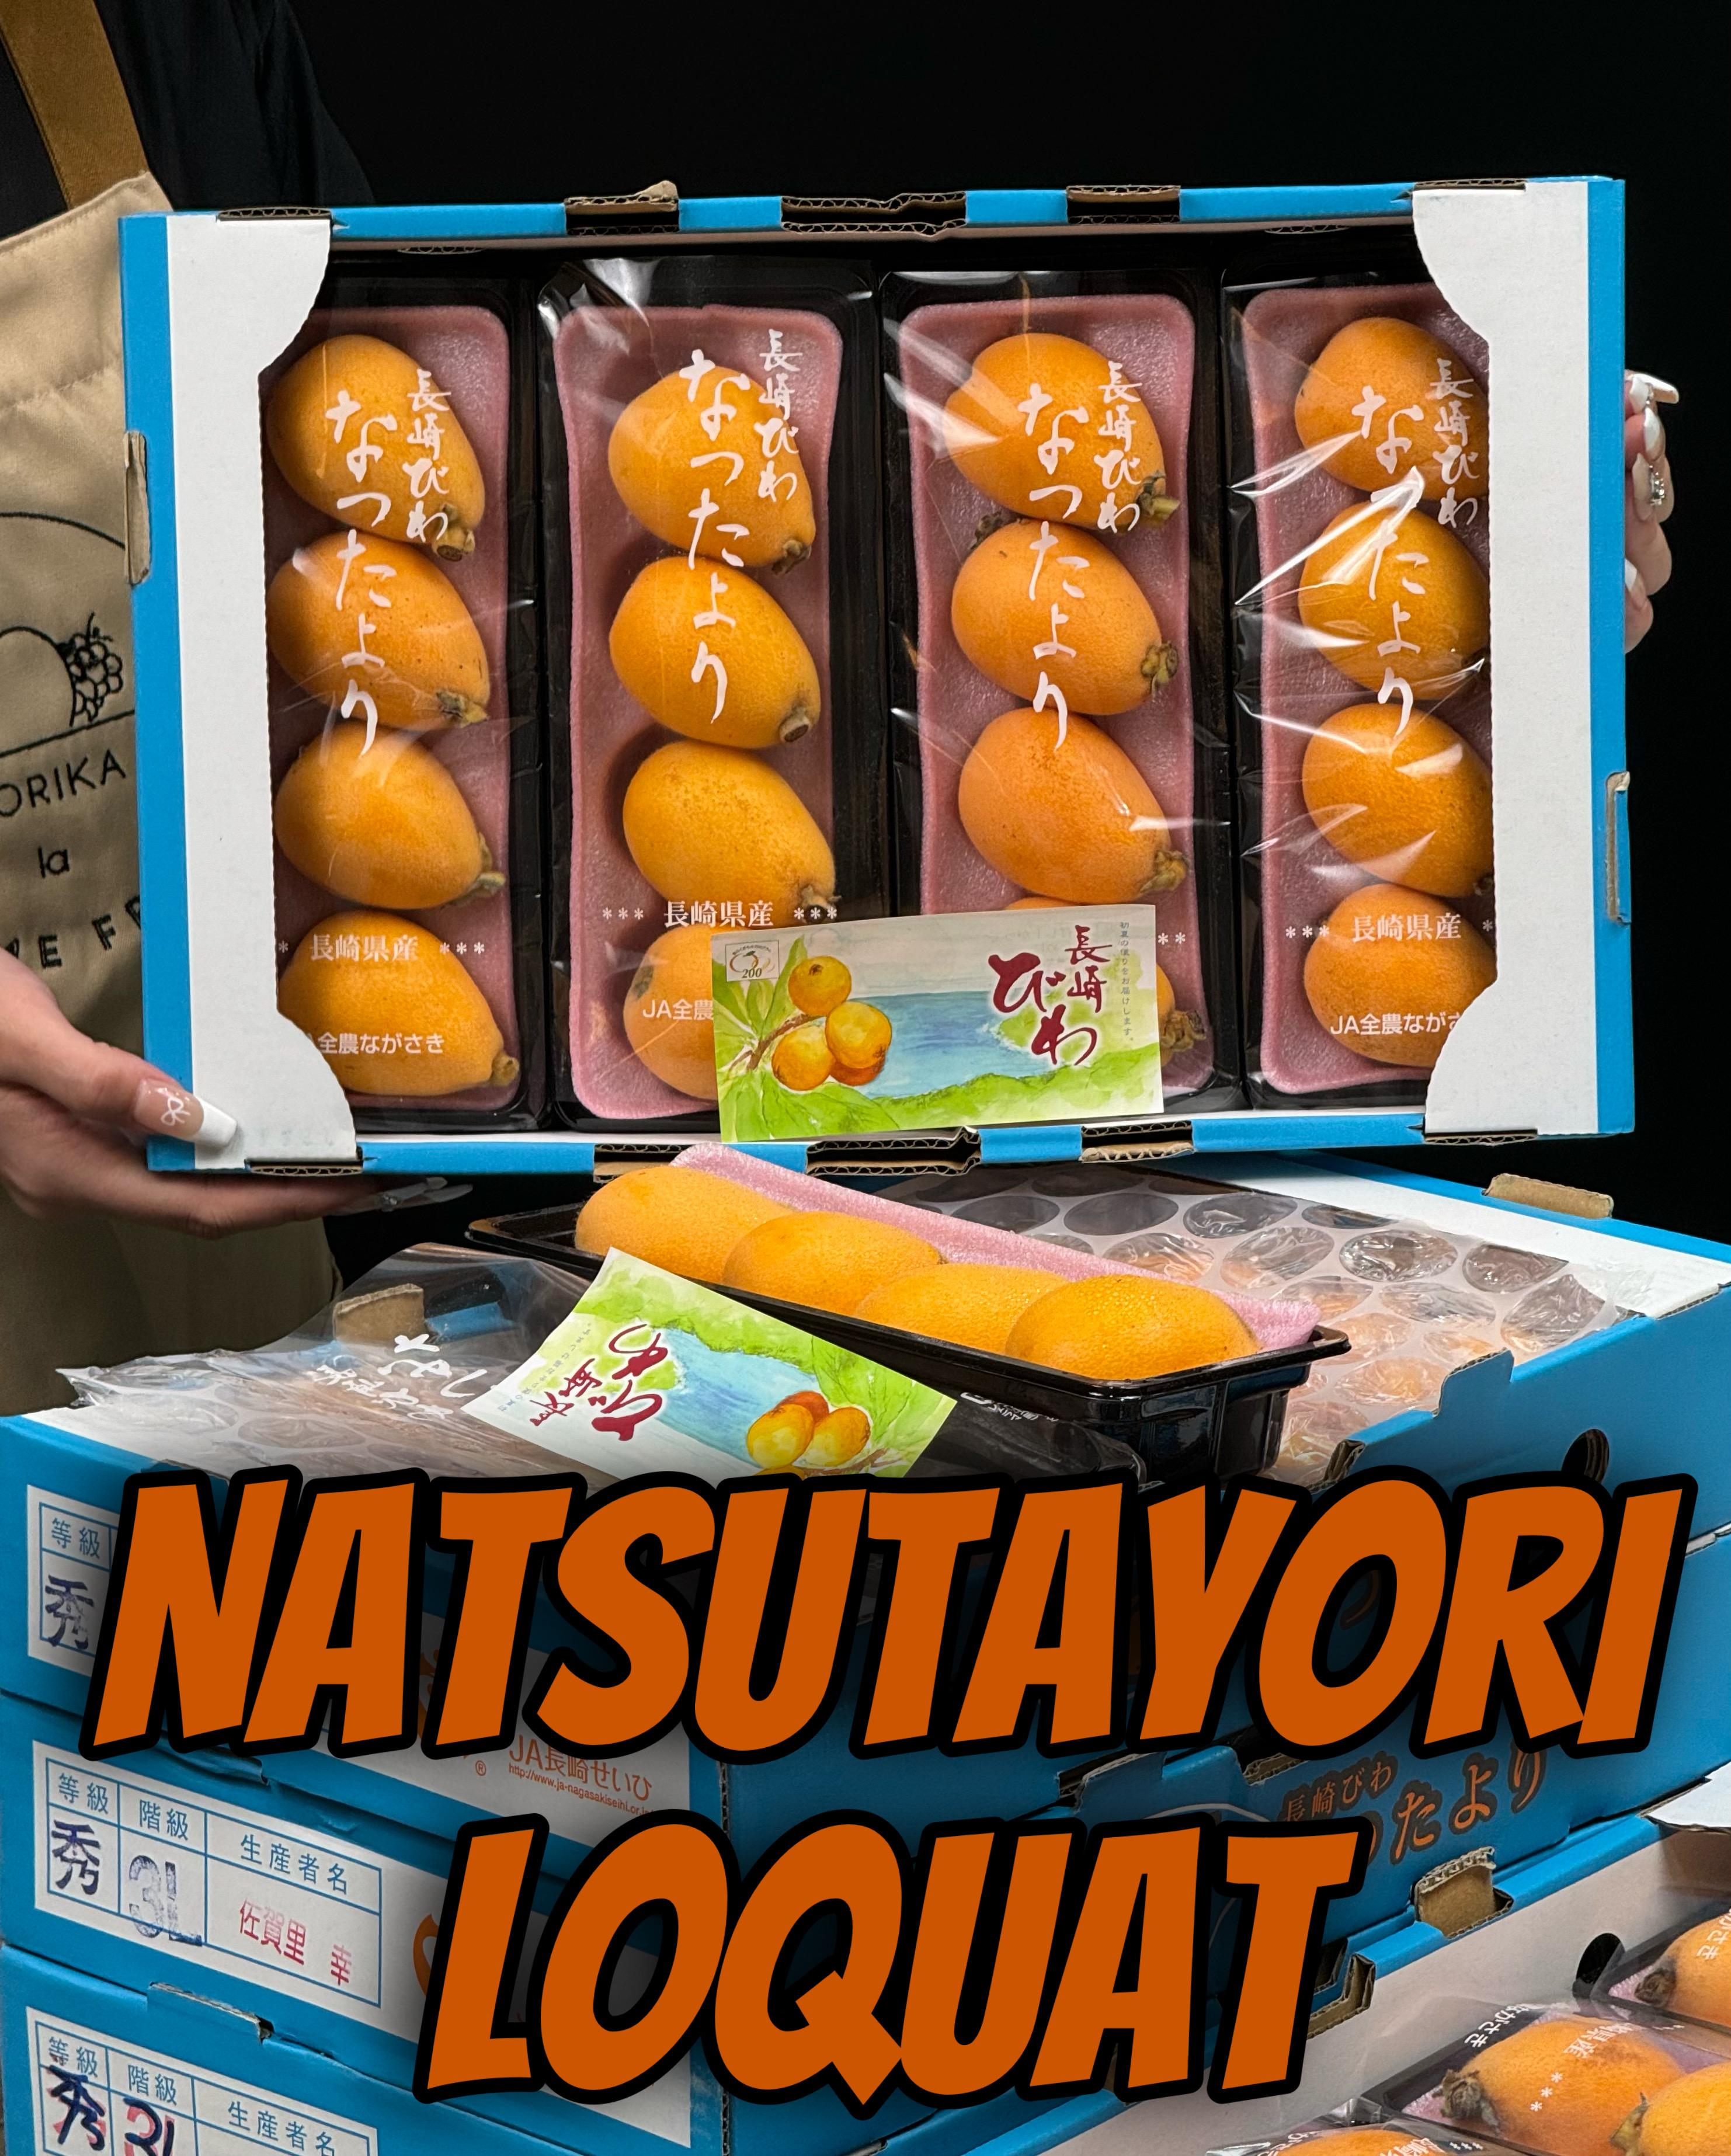 Japan Loquat Natsutayori